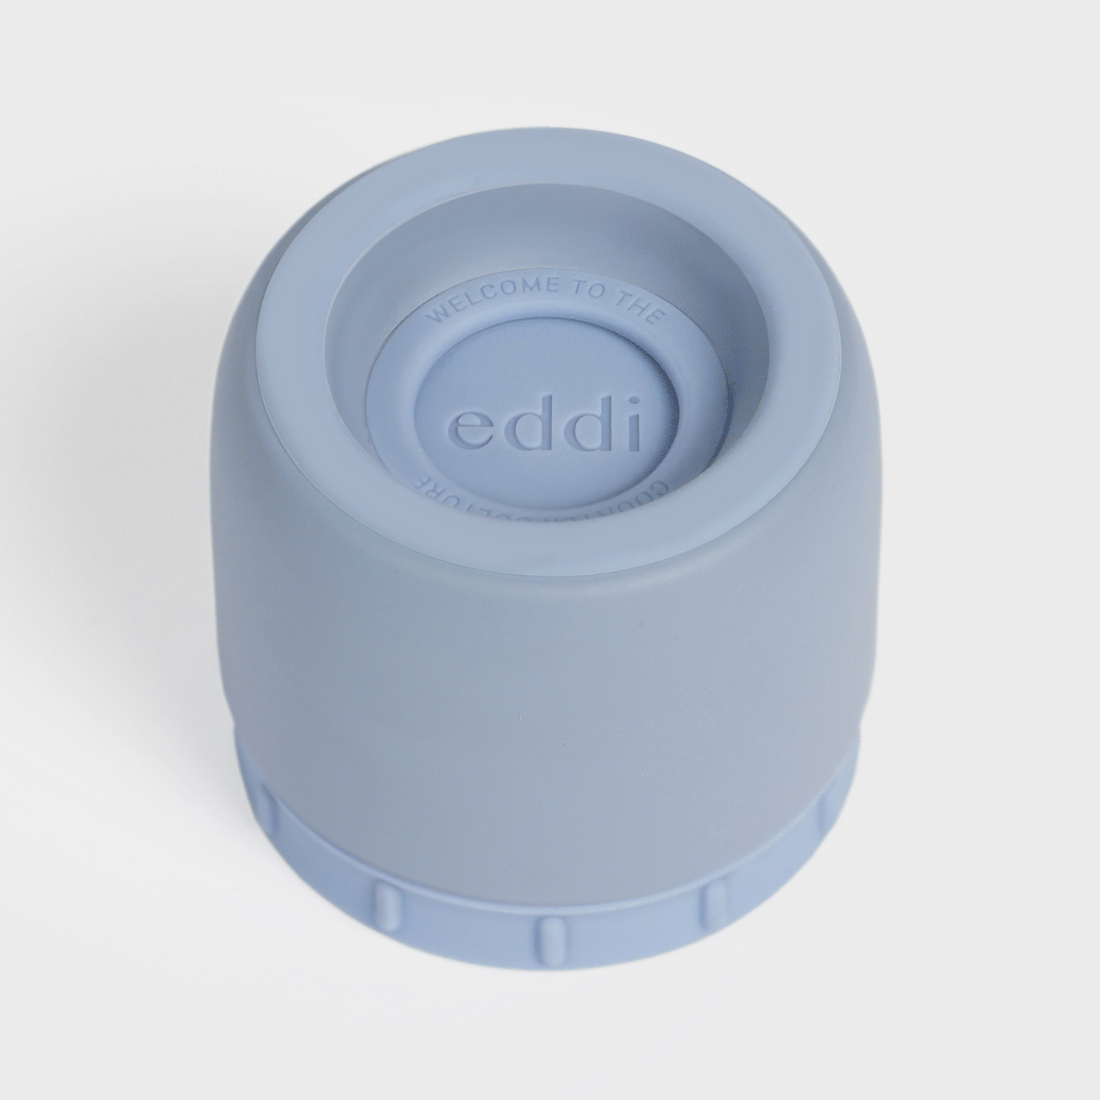 Box Clever，Eddi Soap Dispenser，埃迪皂液器，工业设计，可持续设计，用户体验，